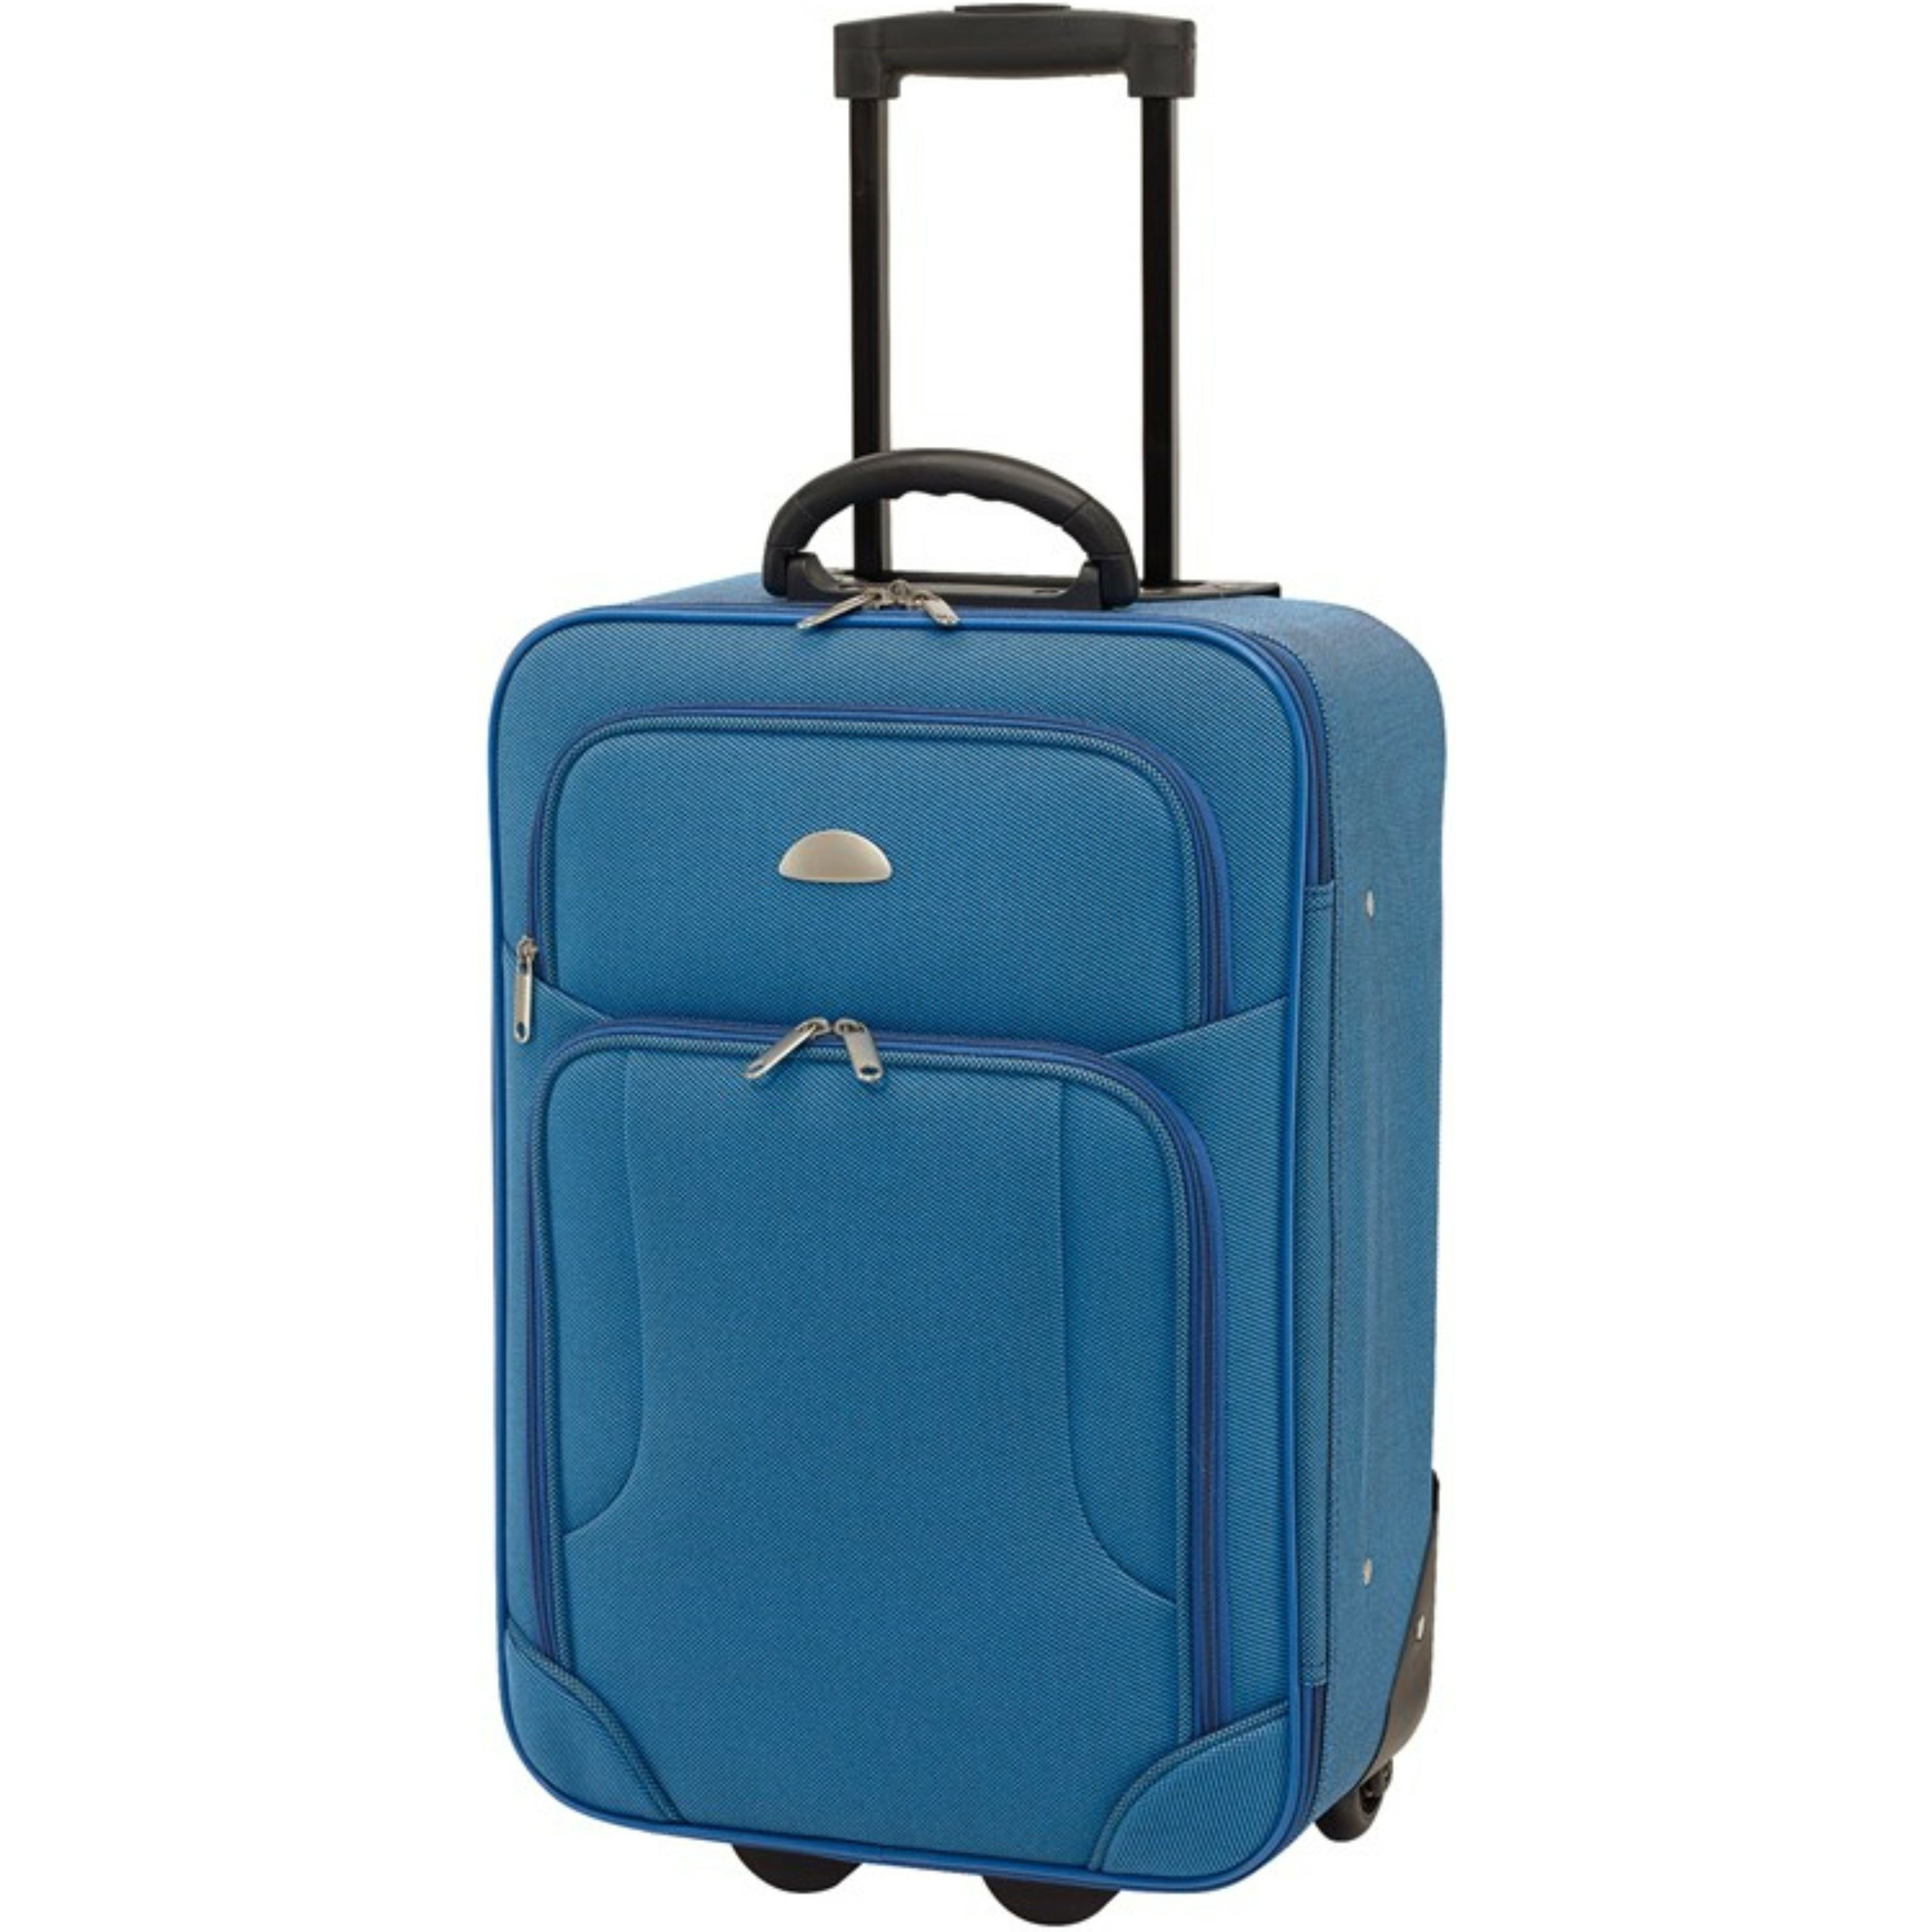 Cabine handbagage reis trolley koffer skate wielen 55 x 35 x 20 cm blauw